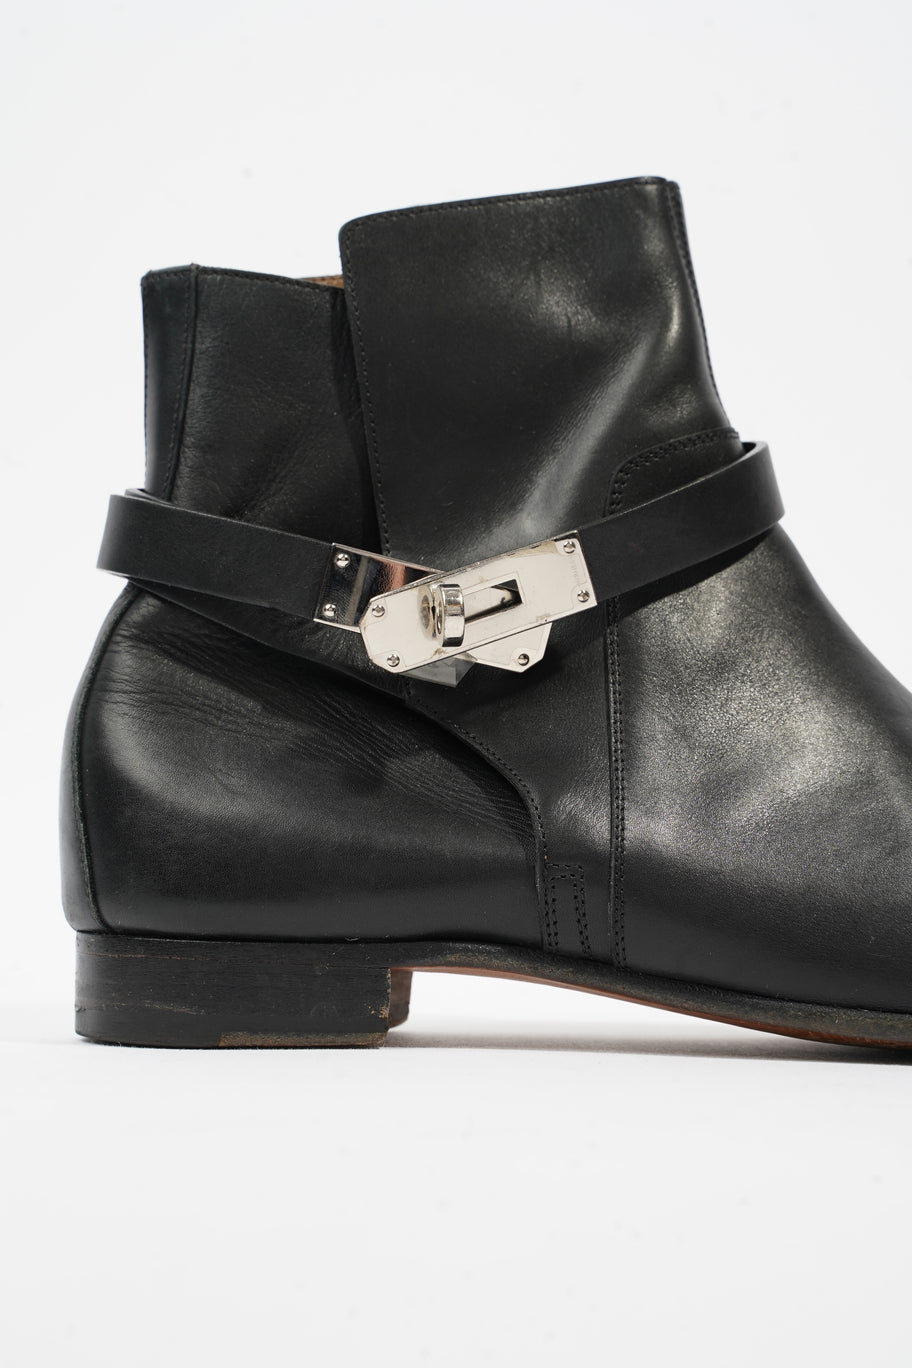 Neo Ankle Boot Black Leather EU 41 UK 8 Image 11